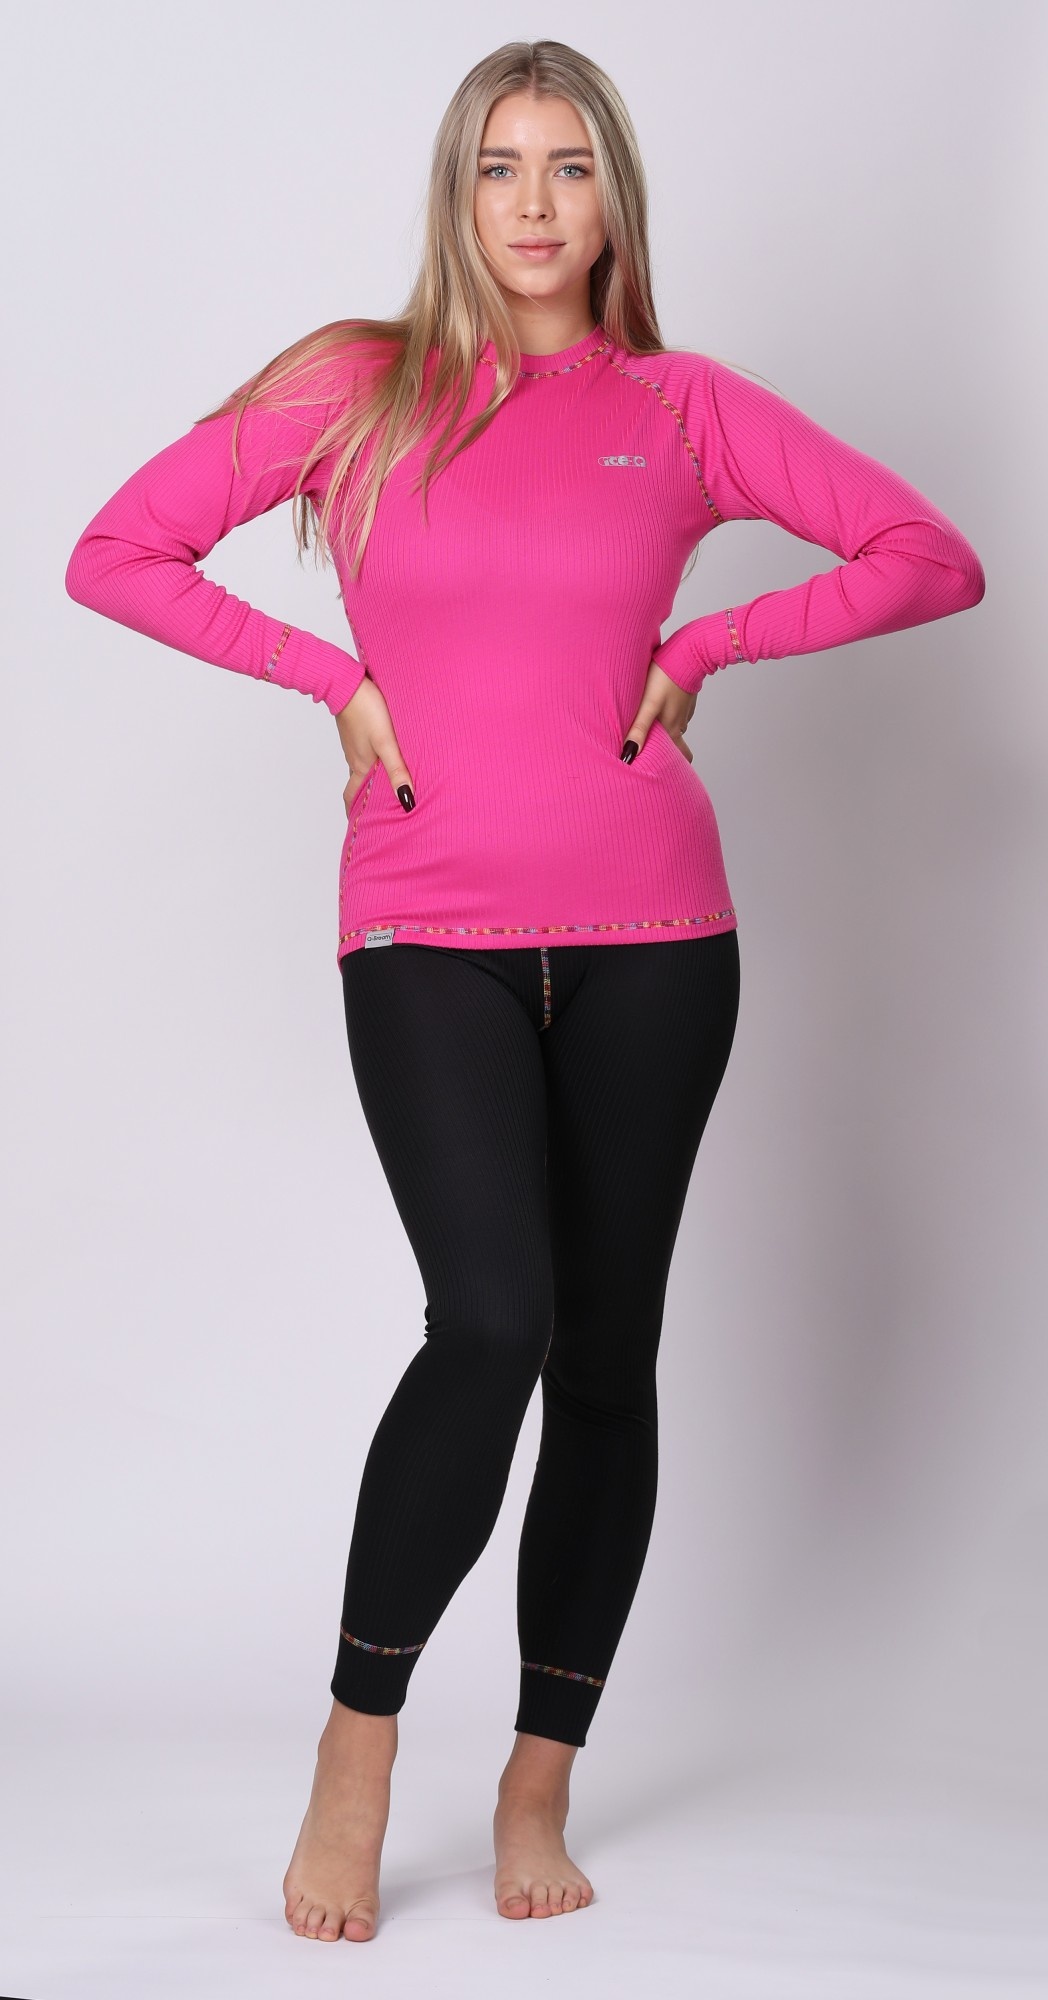 Damska bielizna termoaktywna Ice-Q Smart Woman Pink/Black